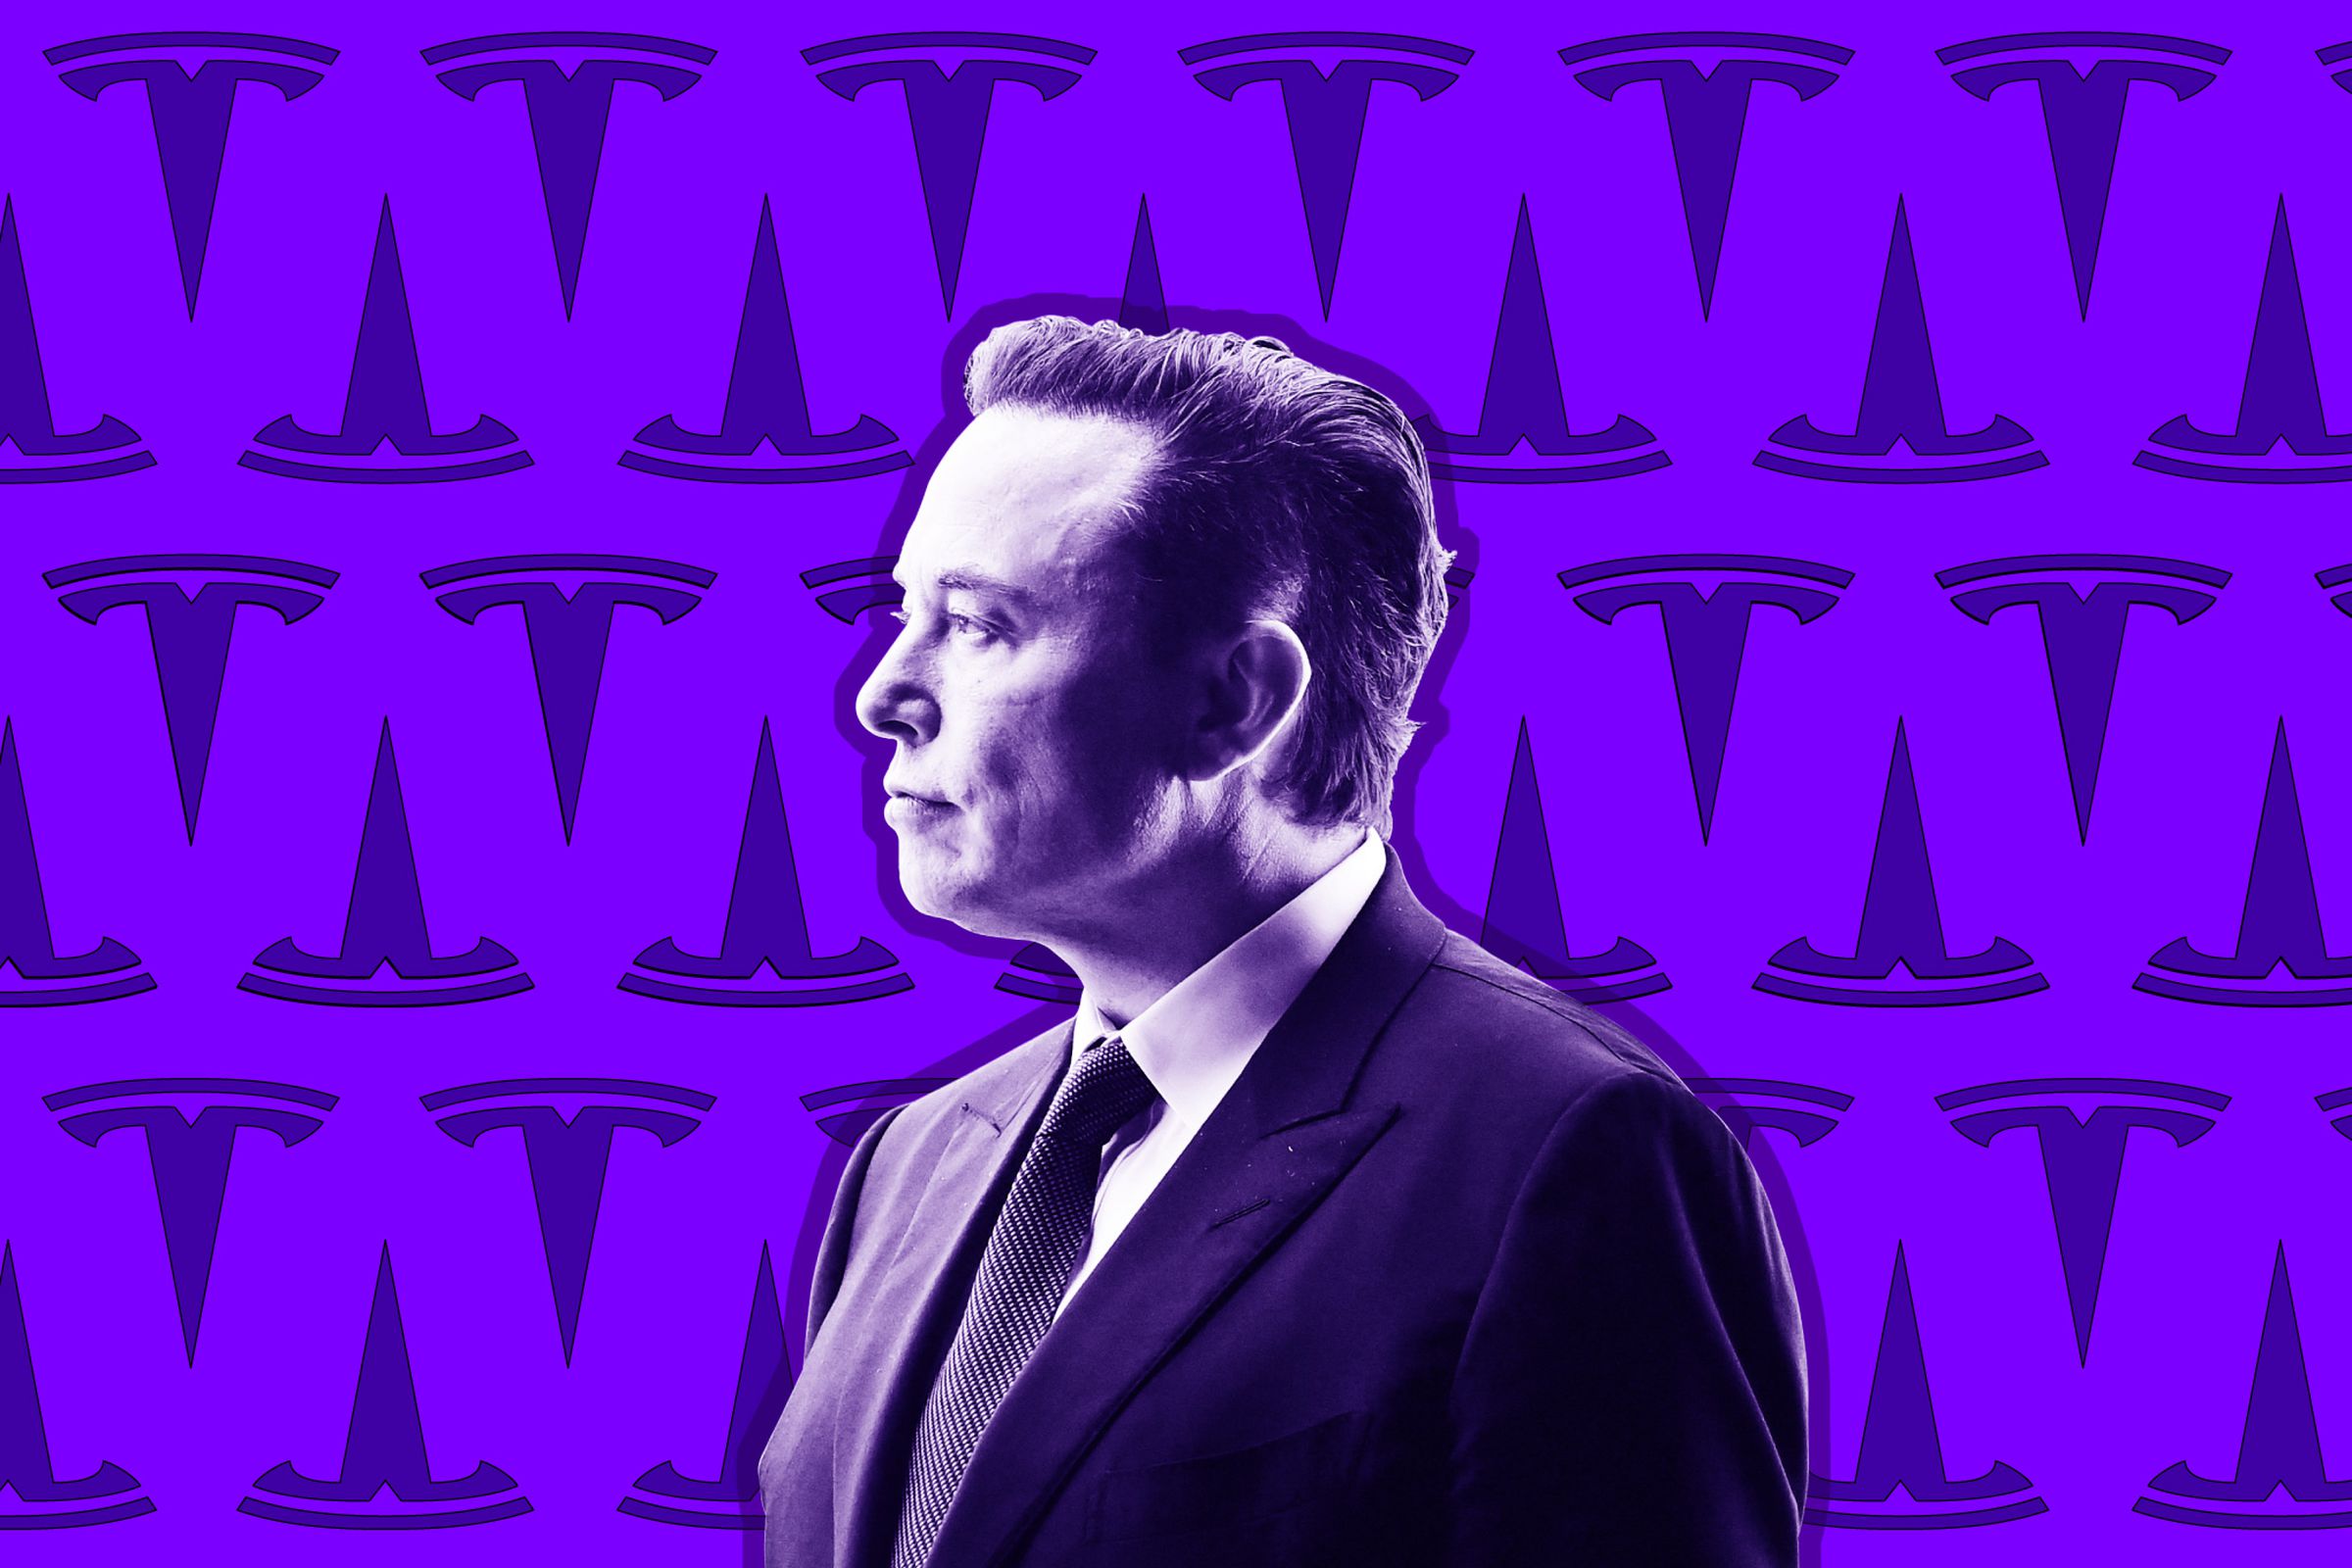 Elon Musk against a purple background of Tesla logos.